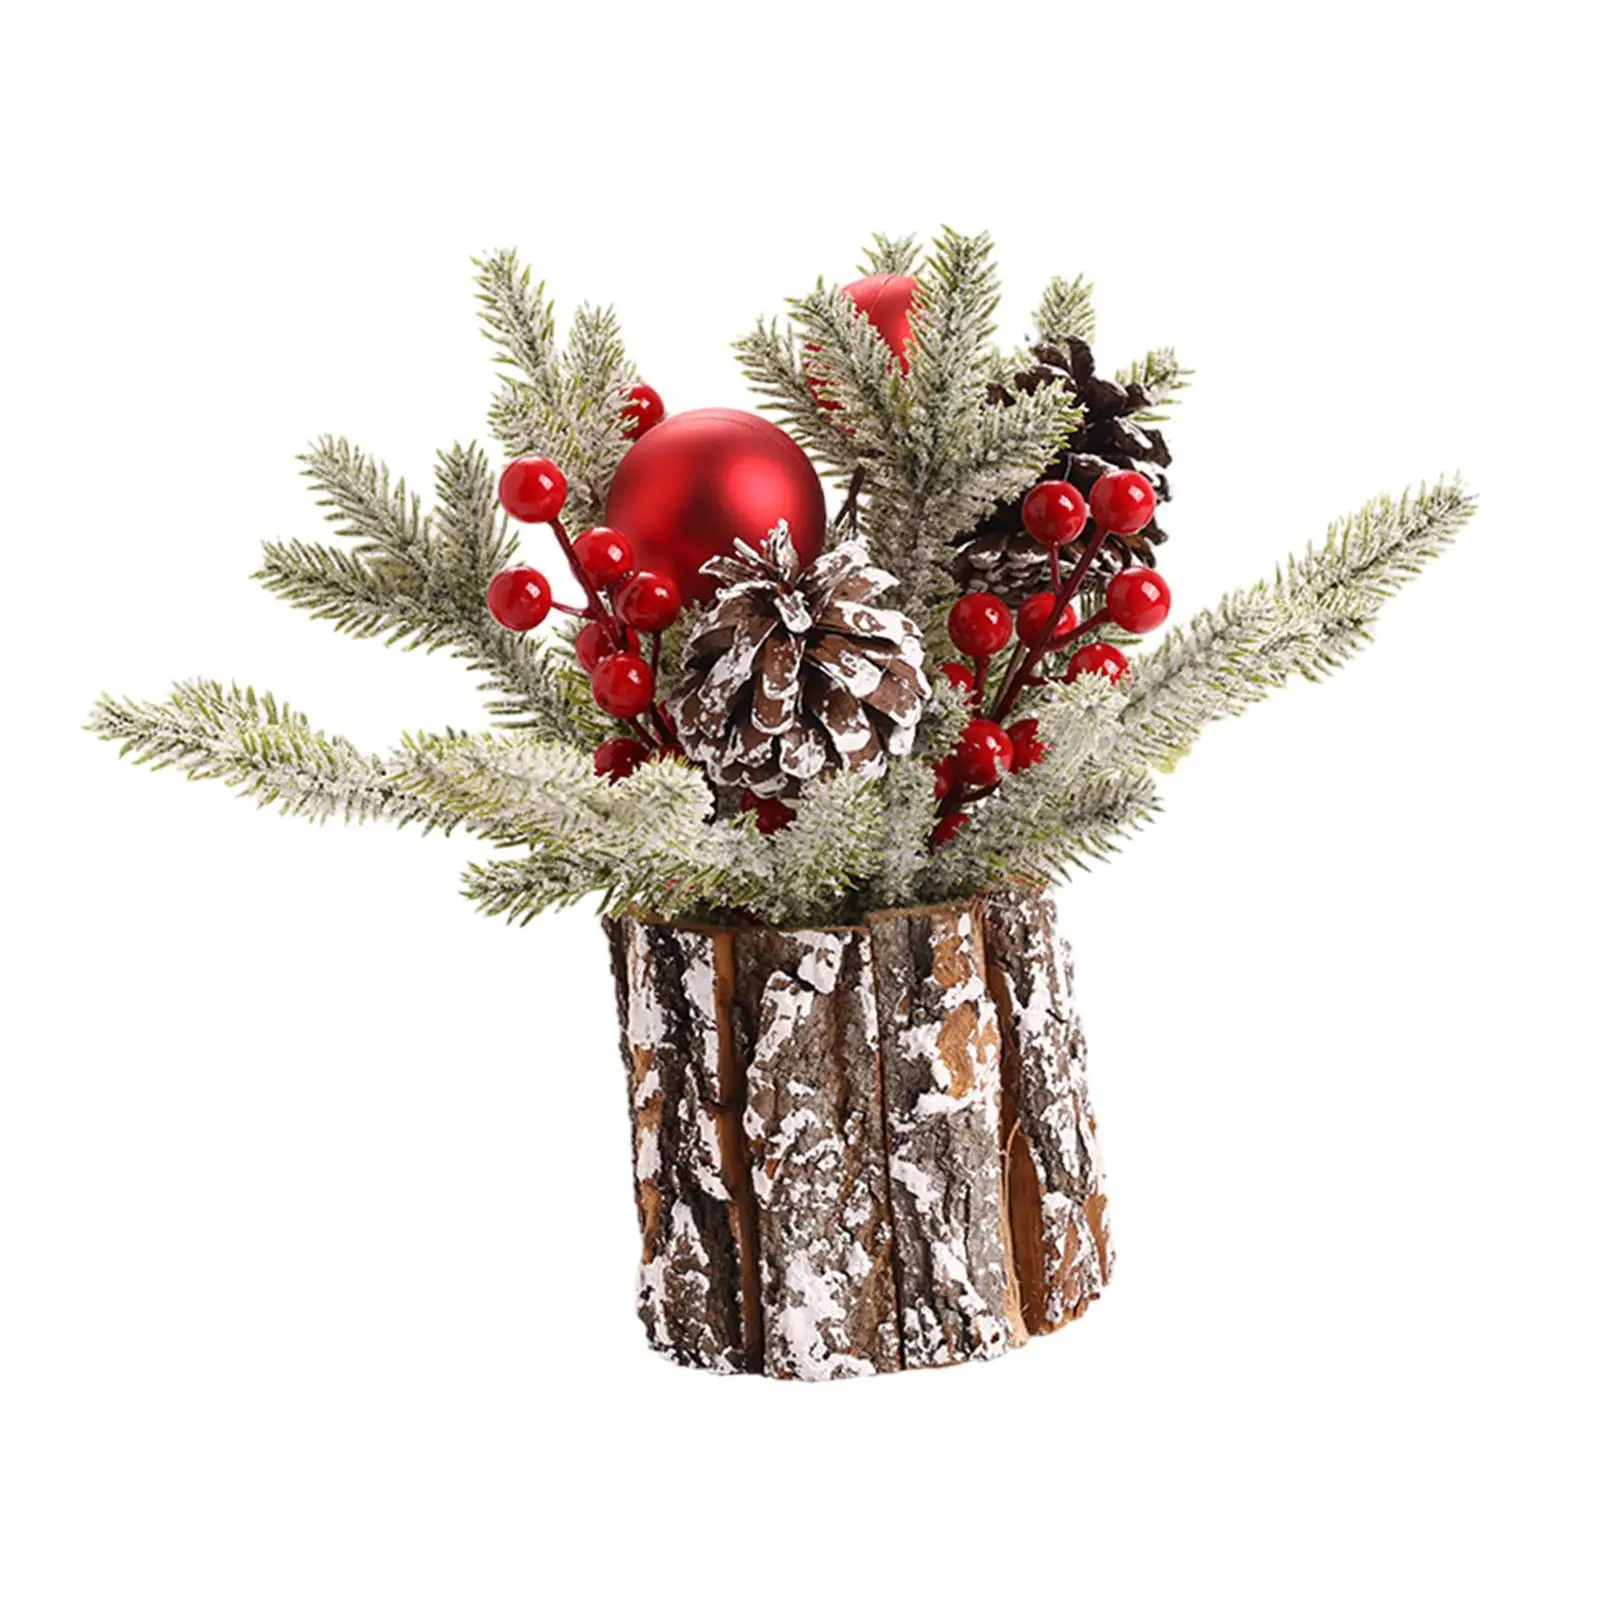 Tabletop Christmas Tree Christmas Gift Crafts Christmas Ornament Artificial Christmas Tree for Garden Farmhouse Home Decor